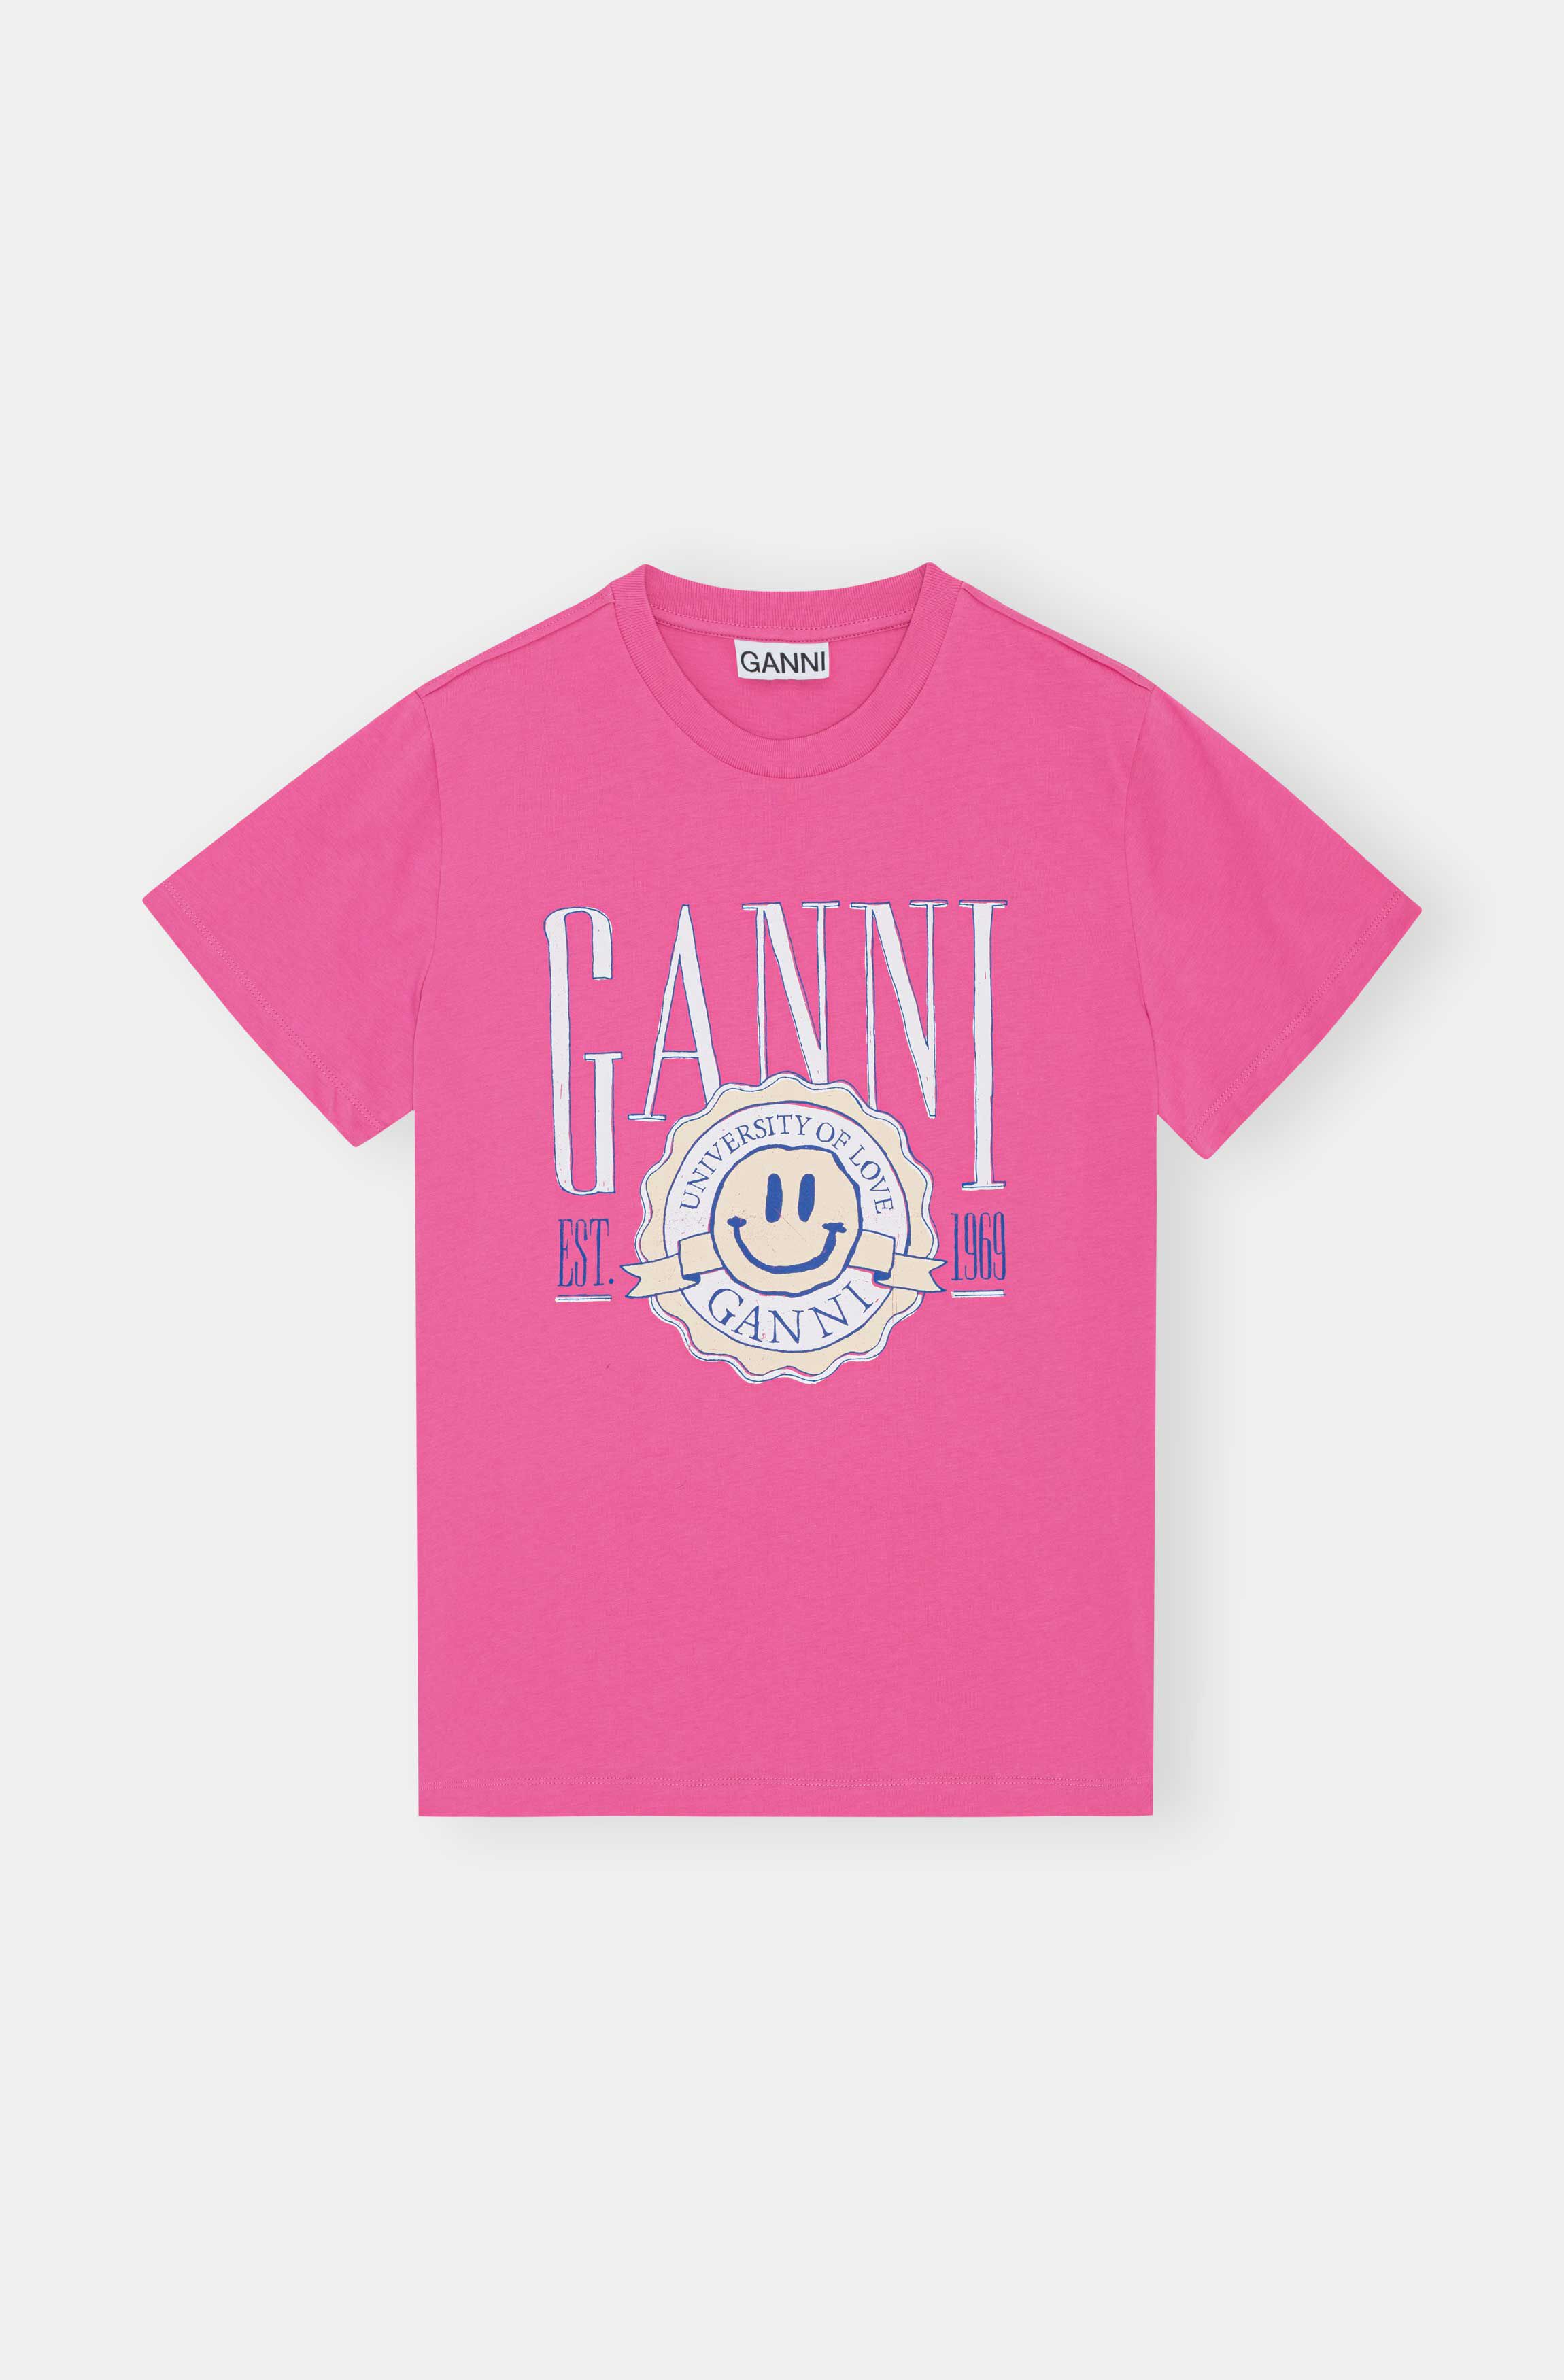 GANNI Exclusives | Online Exclusive Clothing | GANNI US